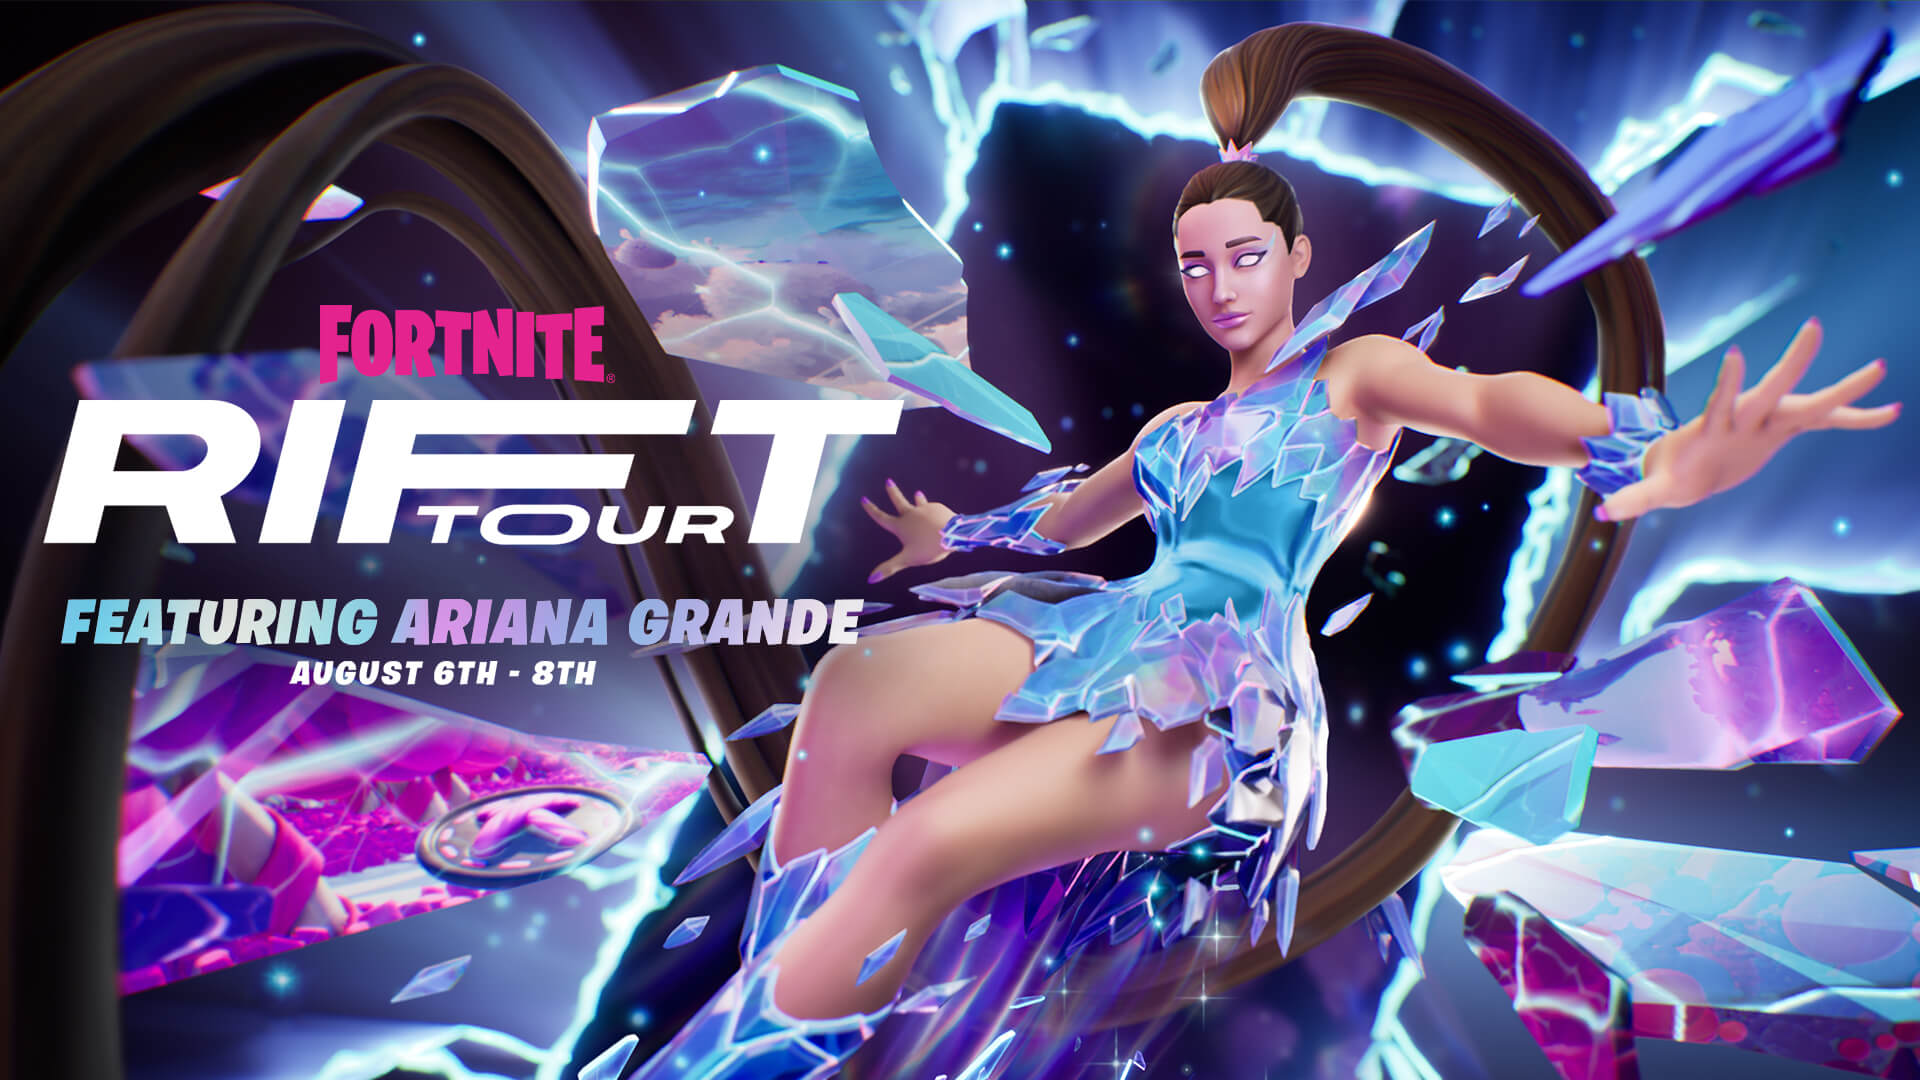 Ariana Grande's Fortnite tour poster